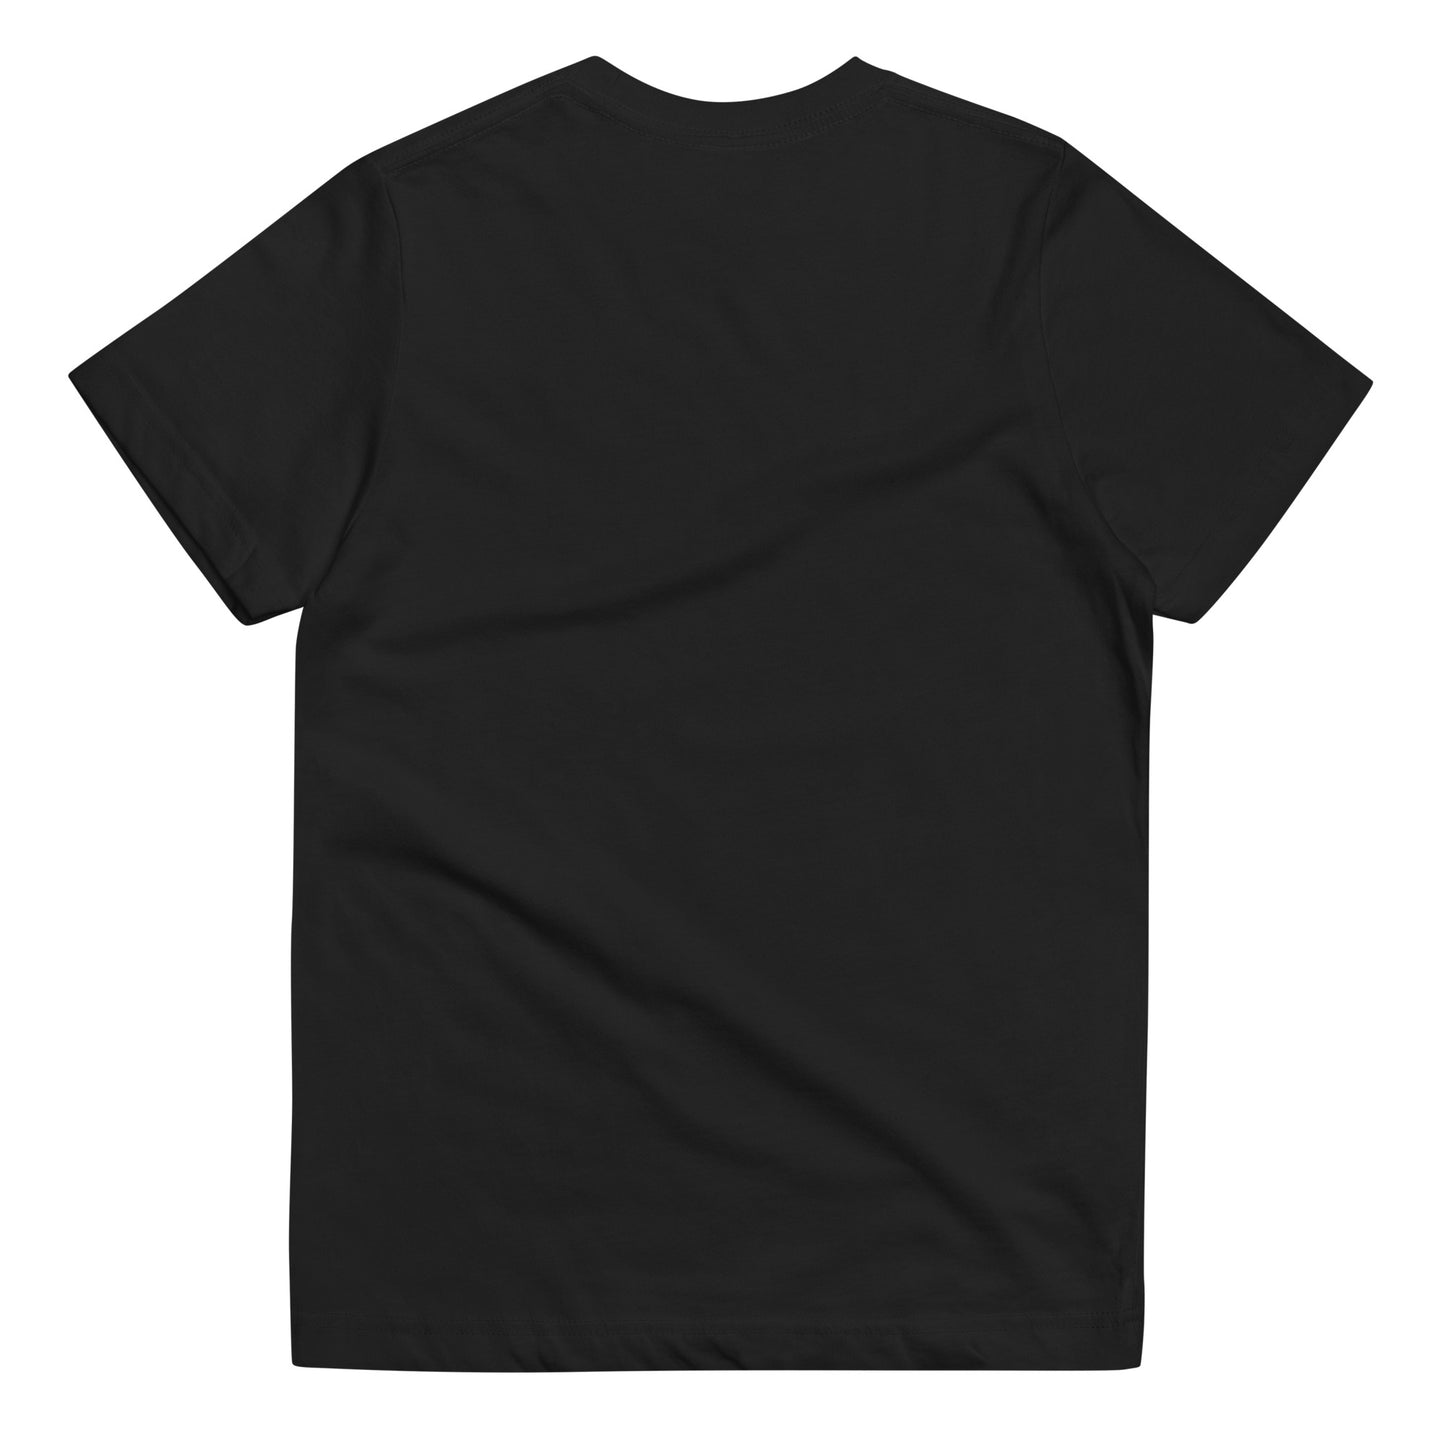  Kids T-Shirt - Black  - Back flat lay view - Go Sea Kayak Byron Bay Crew (issue 2018-2019) logo on front - Genuine Byron Bay Merchandise | Produced by Go Sea Kayak Byron Bay 